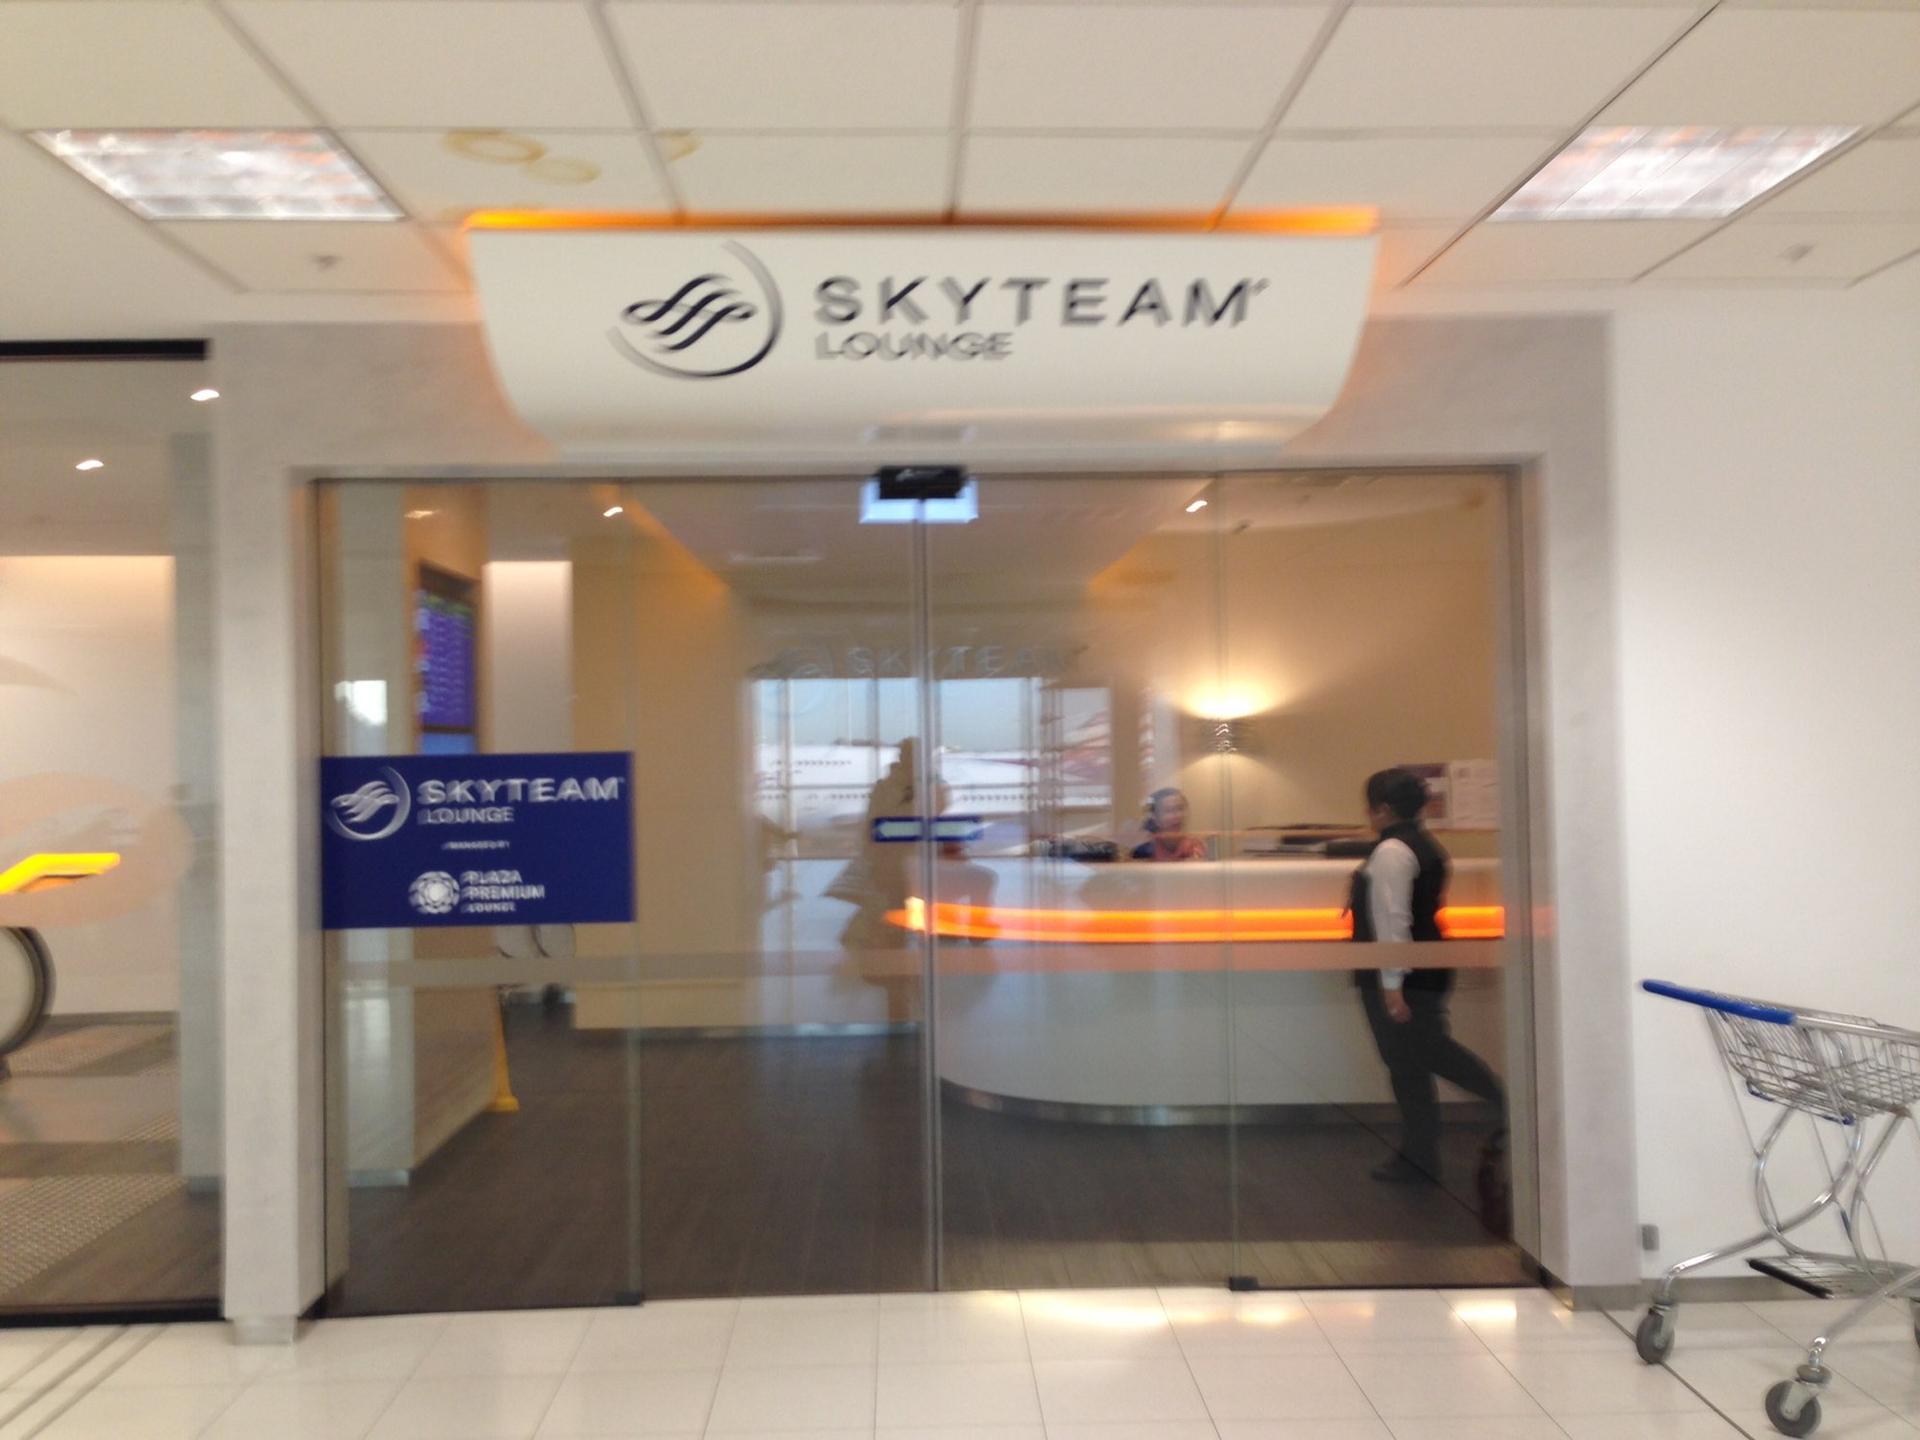 SkyTeam Lounge image 27 of 41